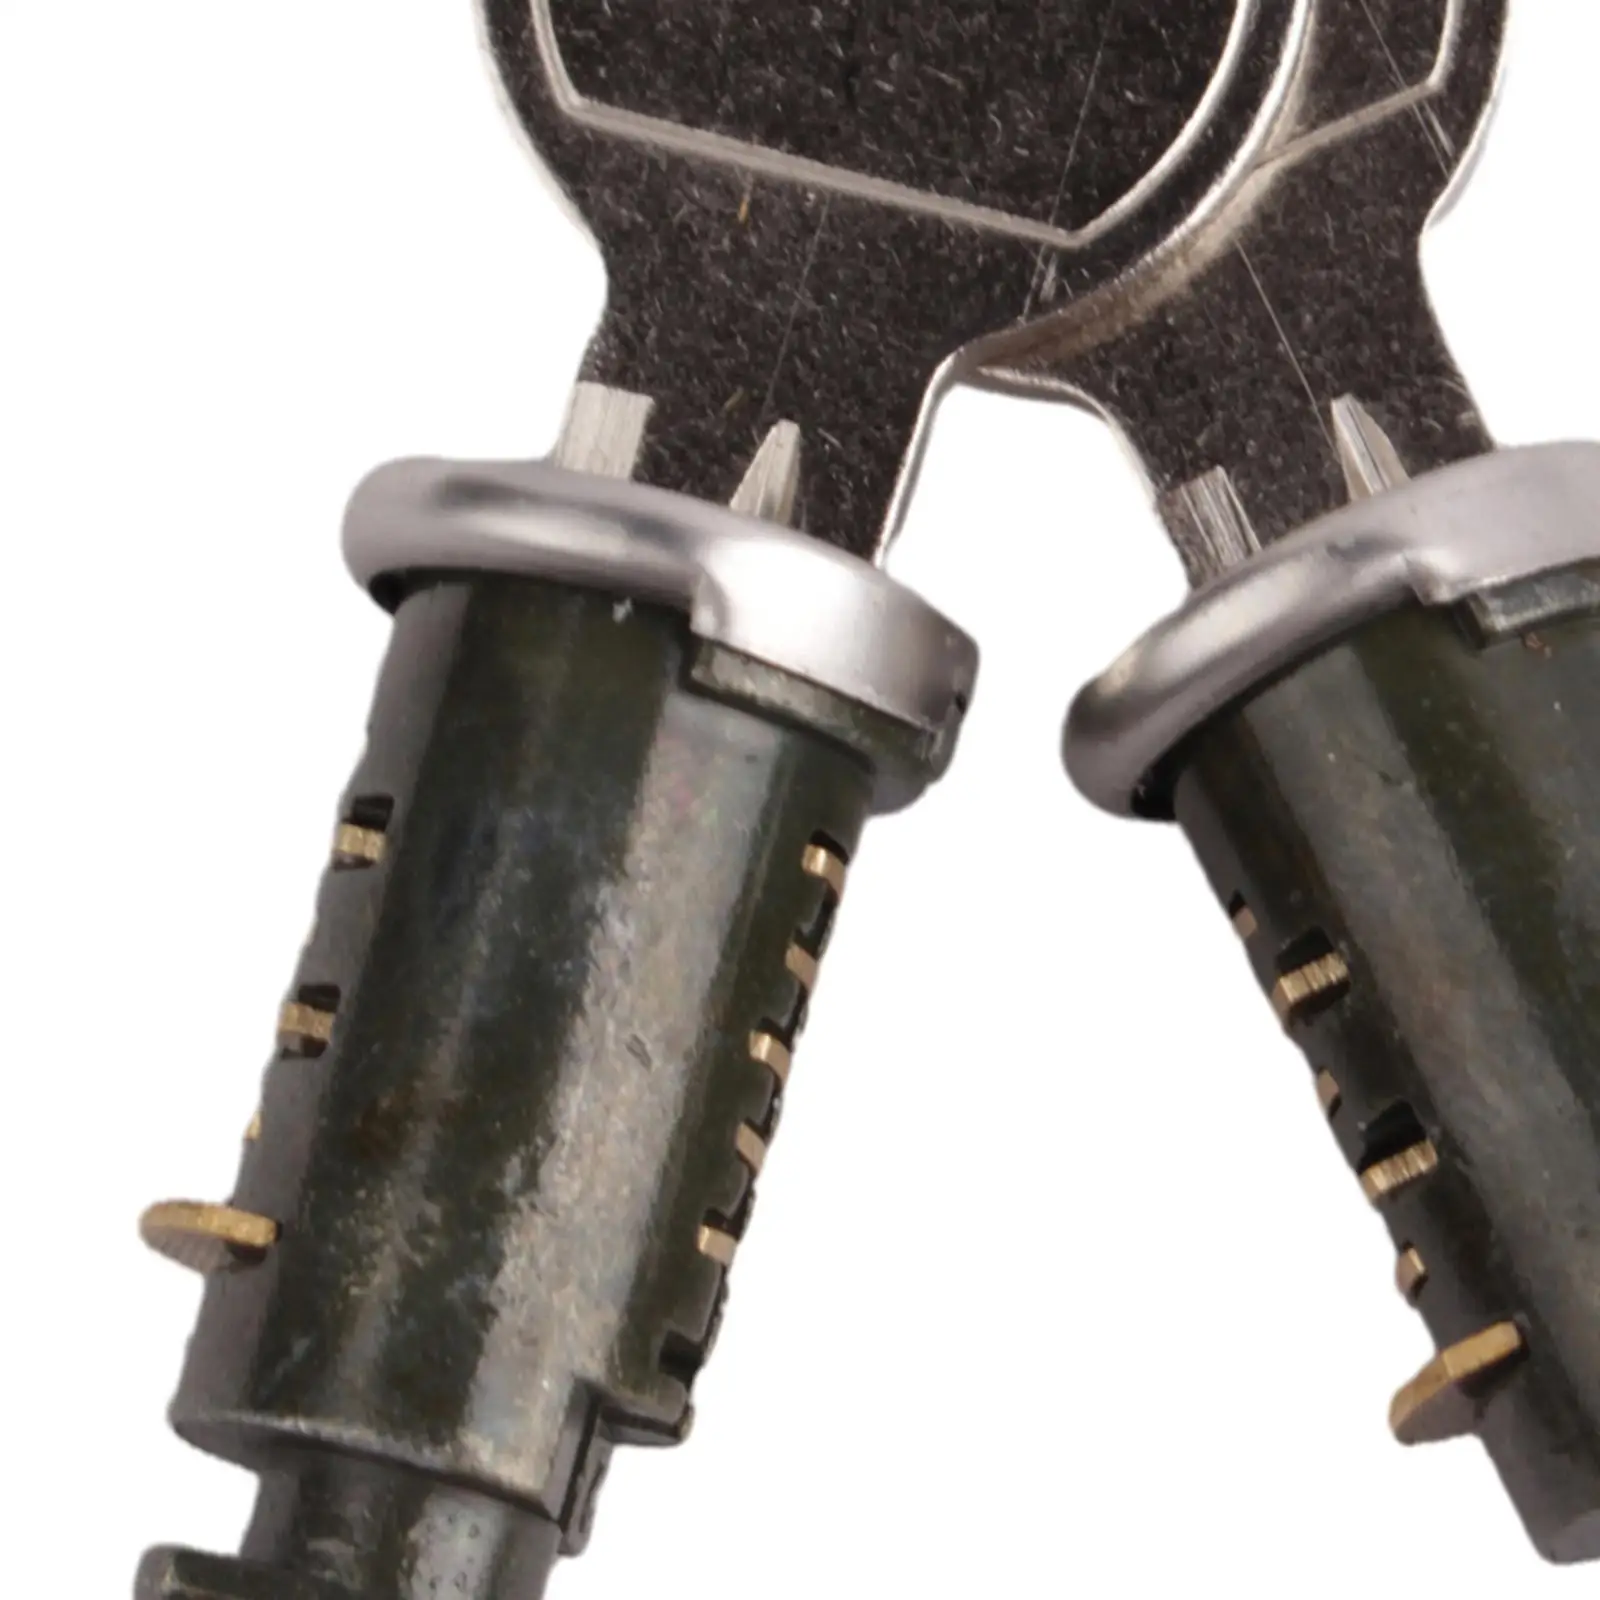 Lock Cylinders for Car Racks System Car Rack Parts Detachable Accessory Cross Bars Locks and Key Kit for SUV Car Rack Locks